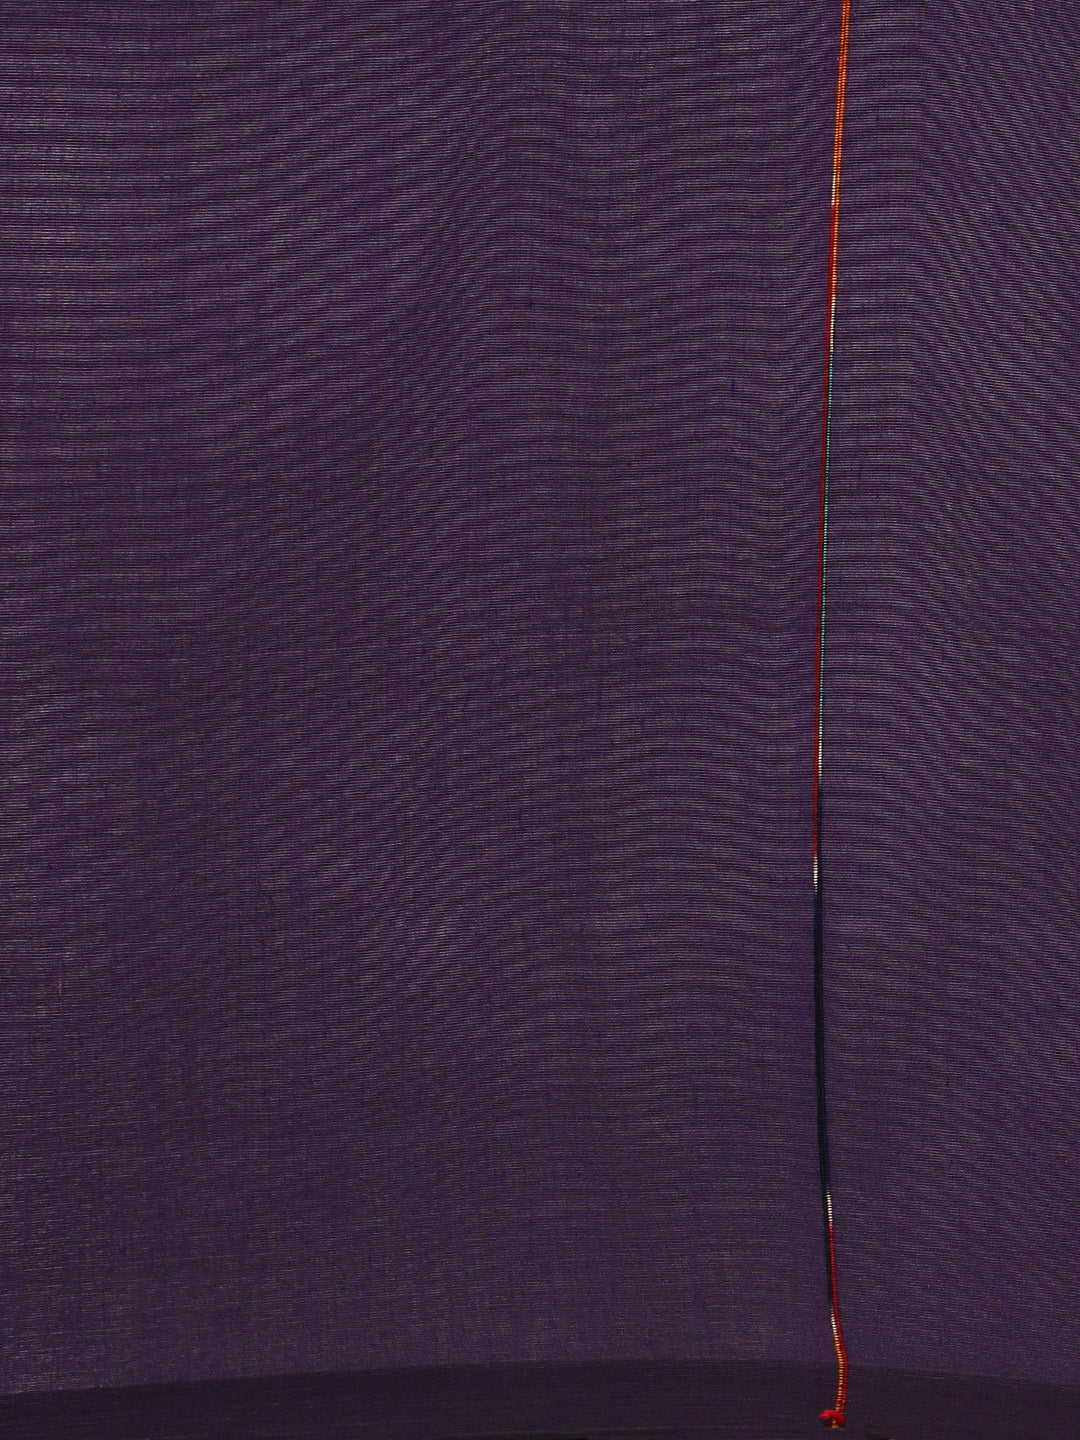 Purple Cotton Saree with pompoms